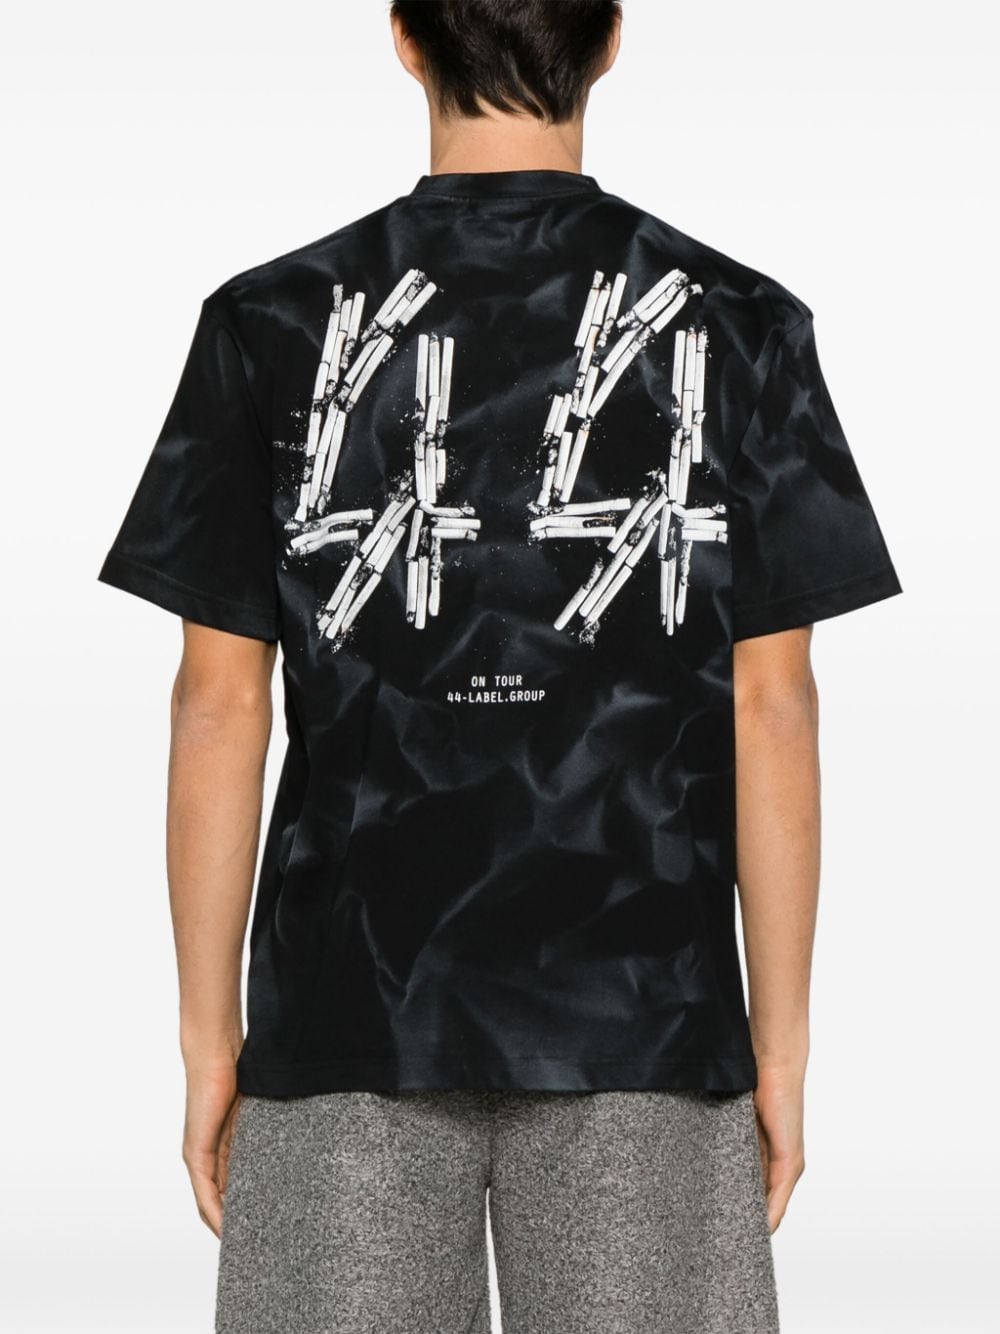 Black smoke effect t-shirt with white logo